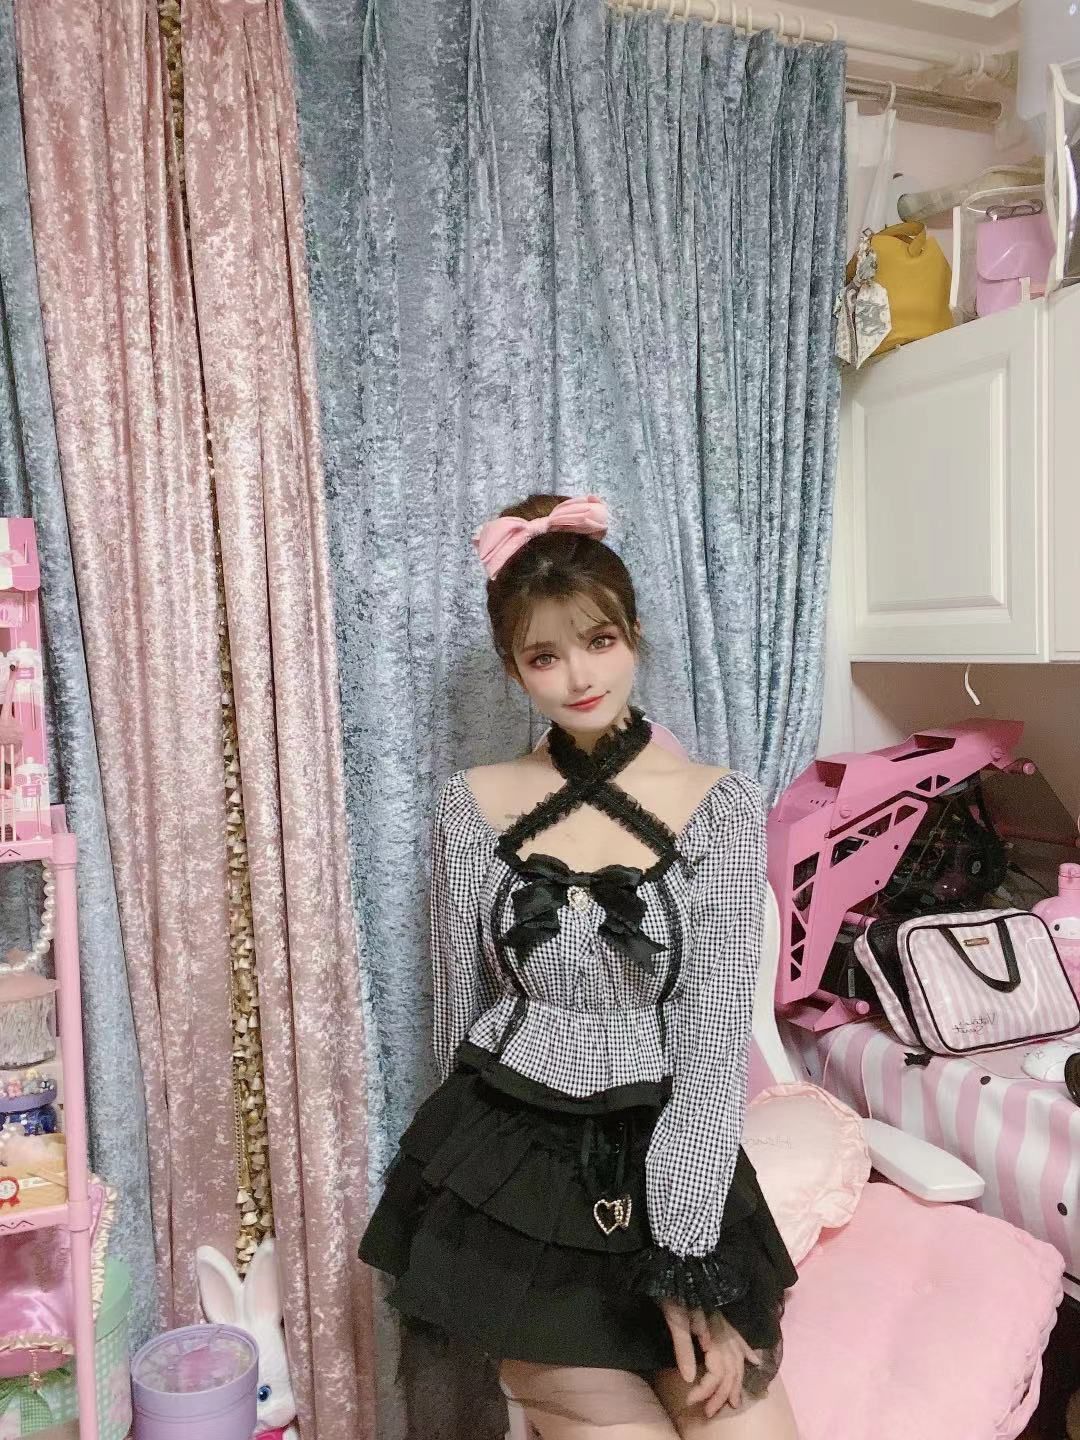 Sweetheart Princess Gothic Black Cake Layered Lace High Waist Mini Skirt